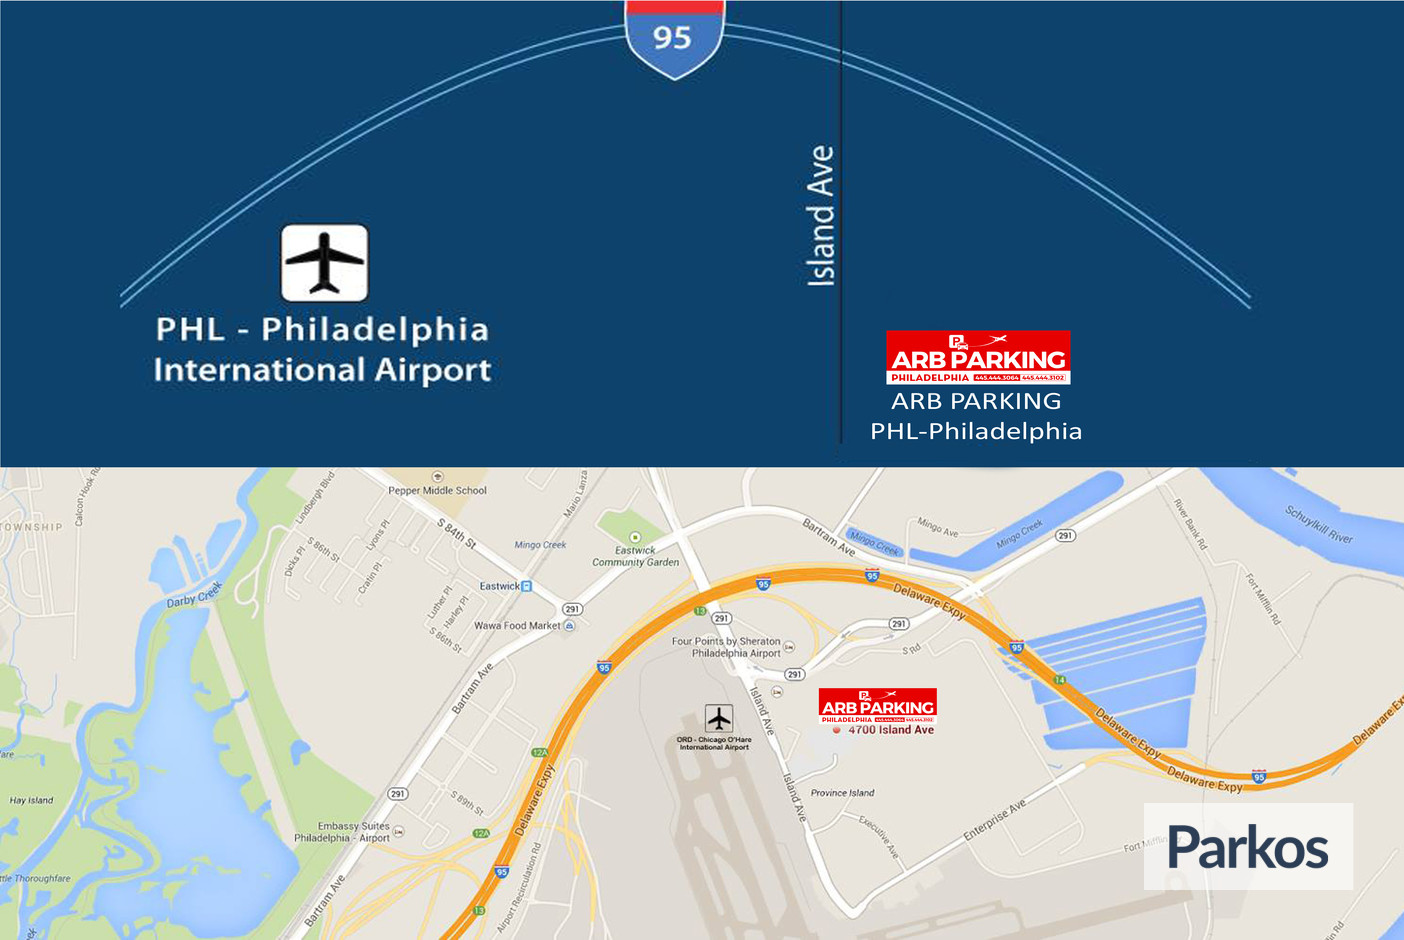 ARB PARKING PHILADELPHIA - Philadelphia Airport Parking - picture 1